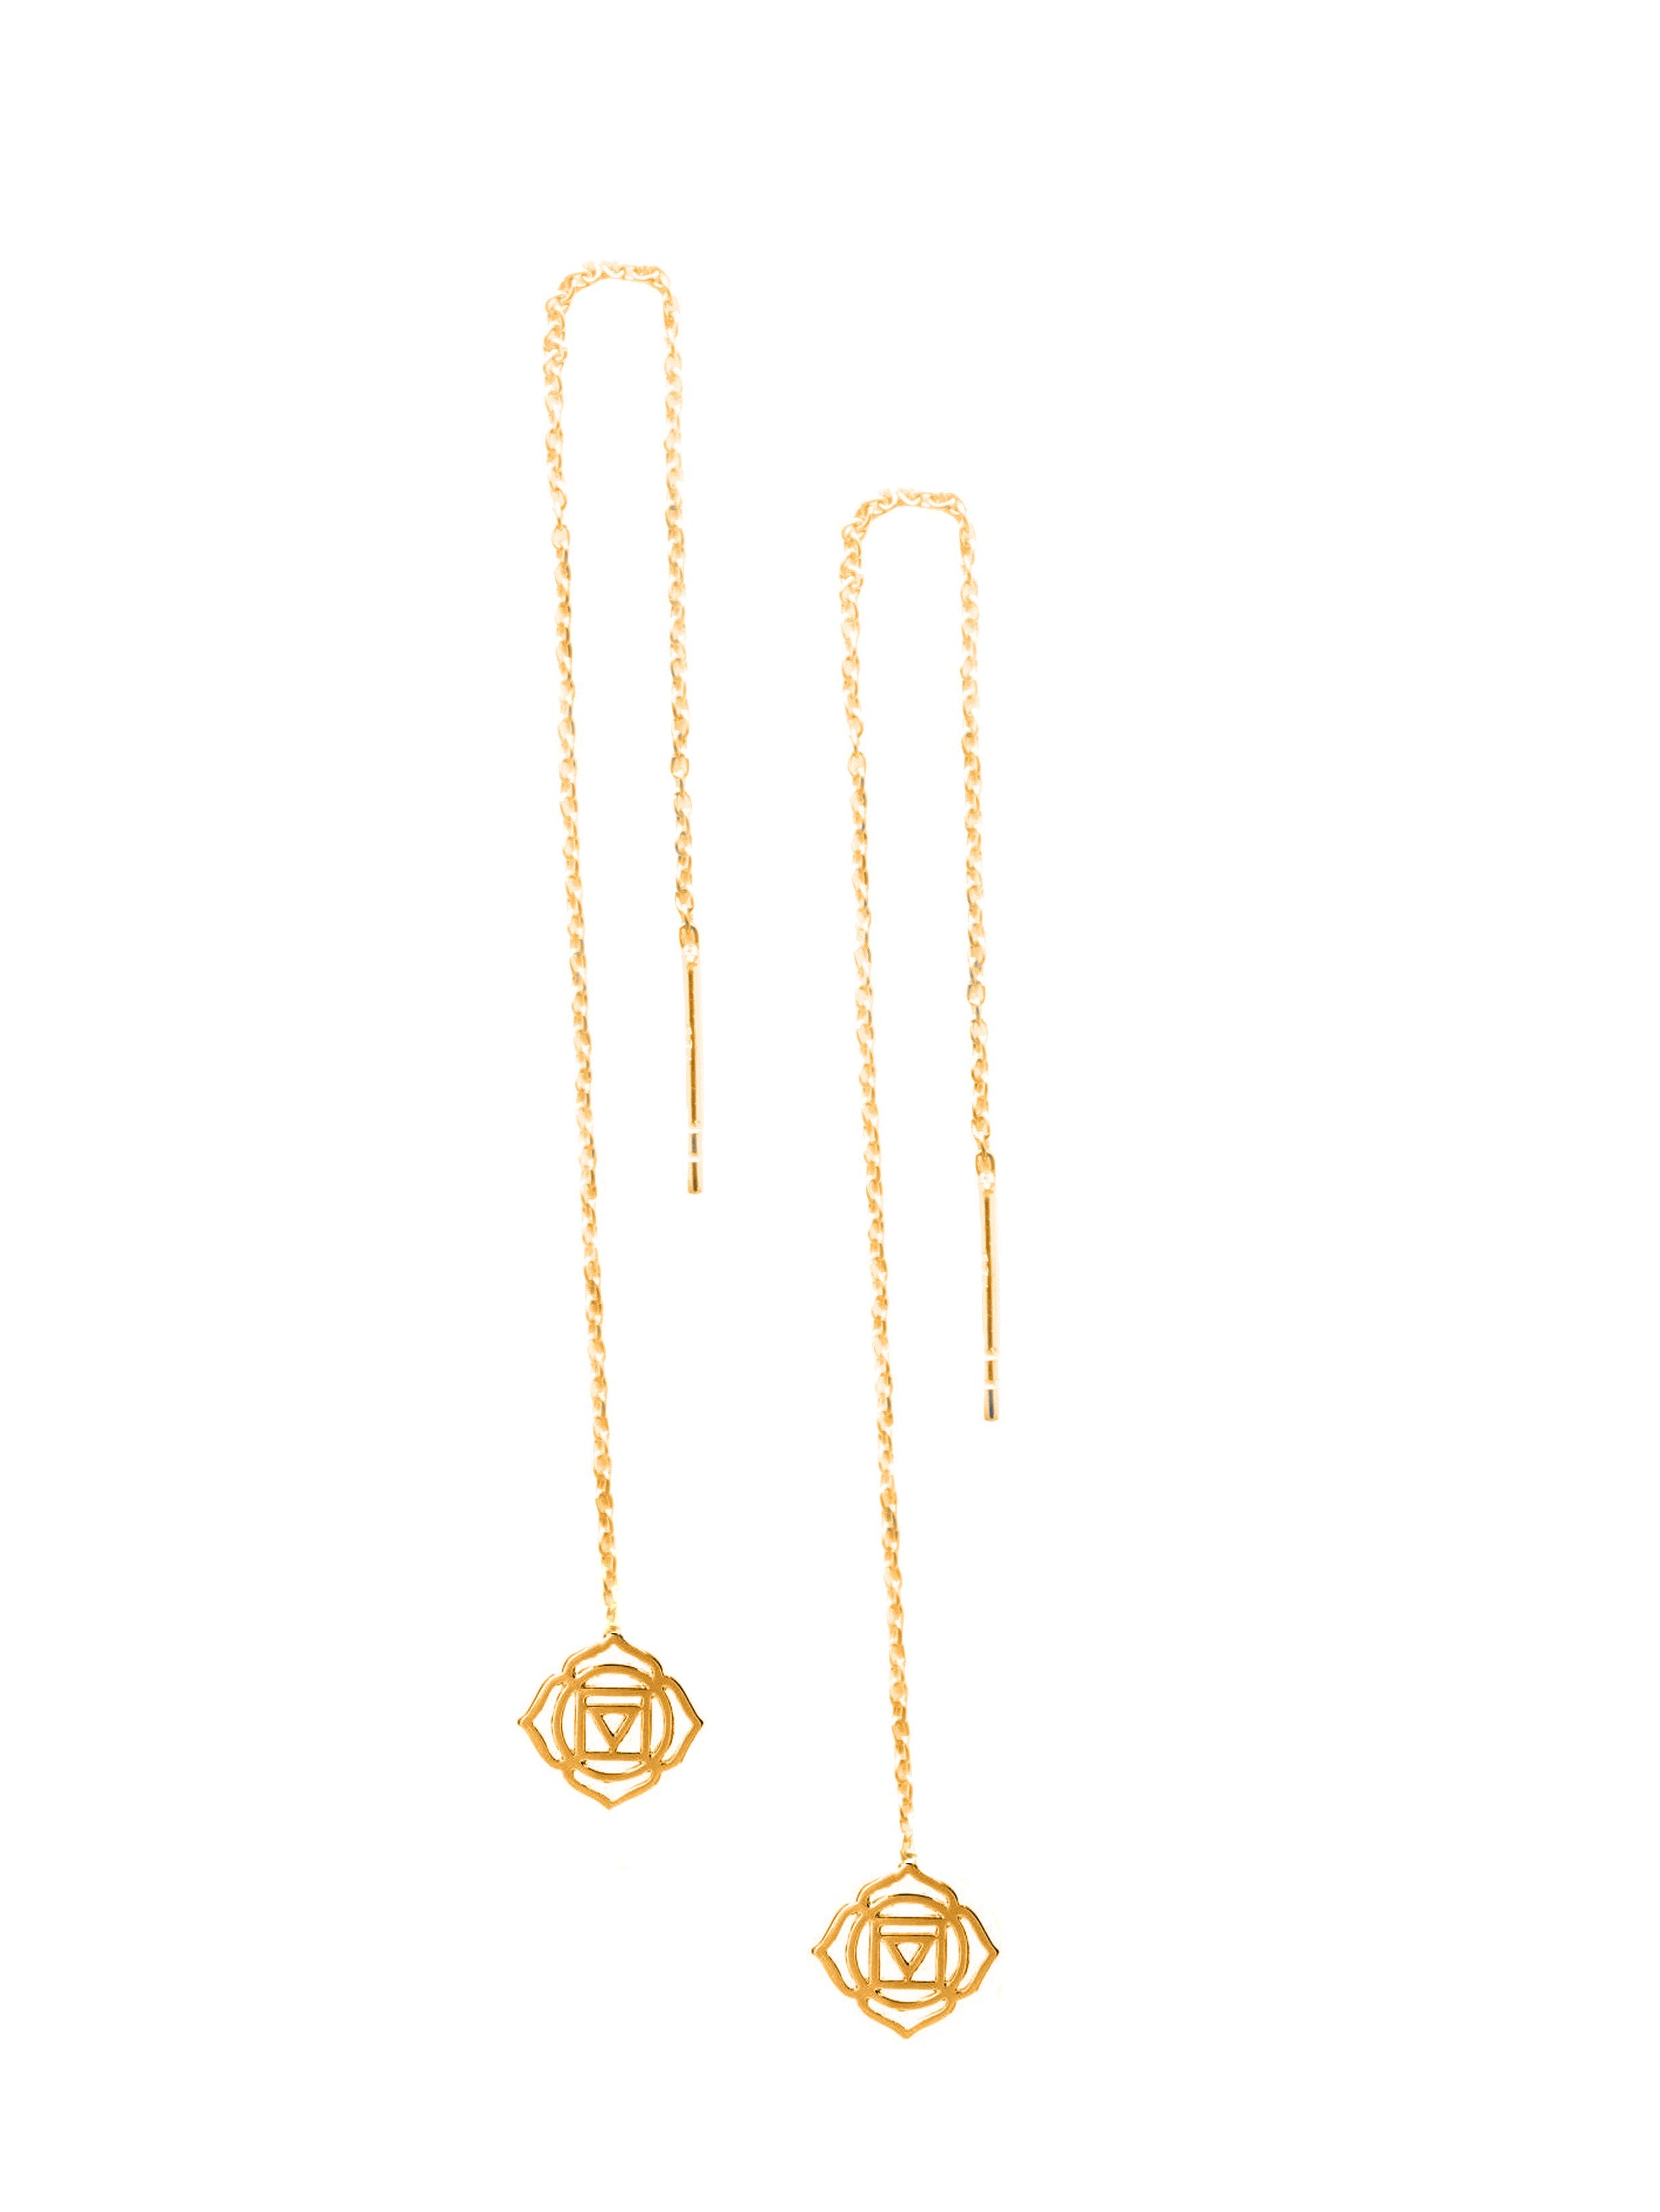 Parallel Chakra silver 925 gold plated earrings - Karma Koncept Lifestyle - BeKarmic